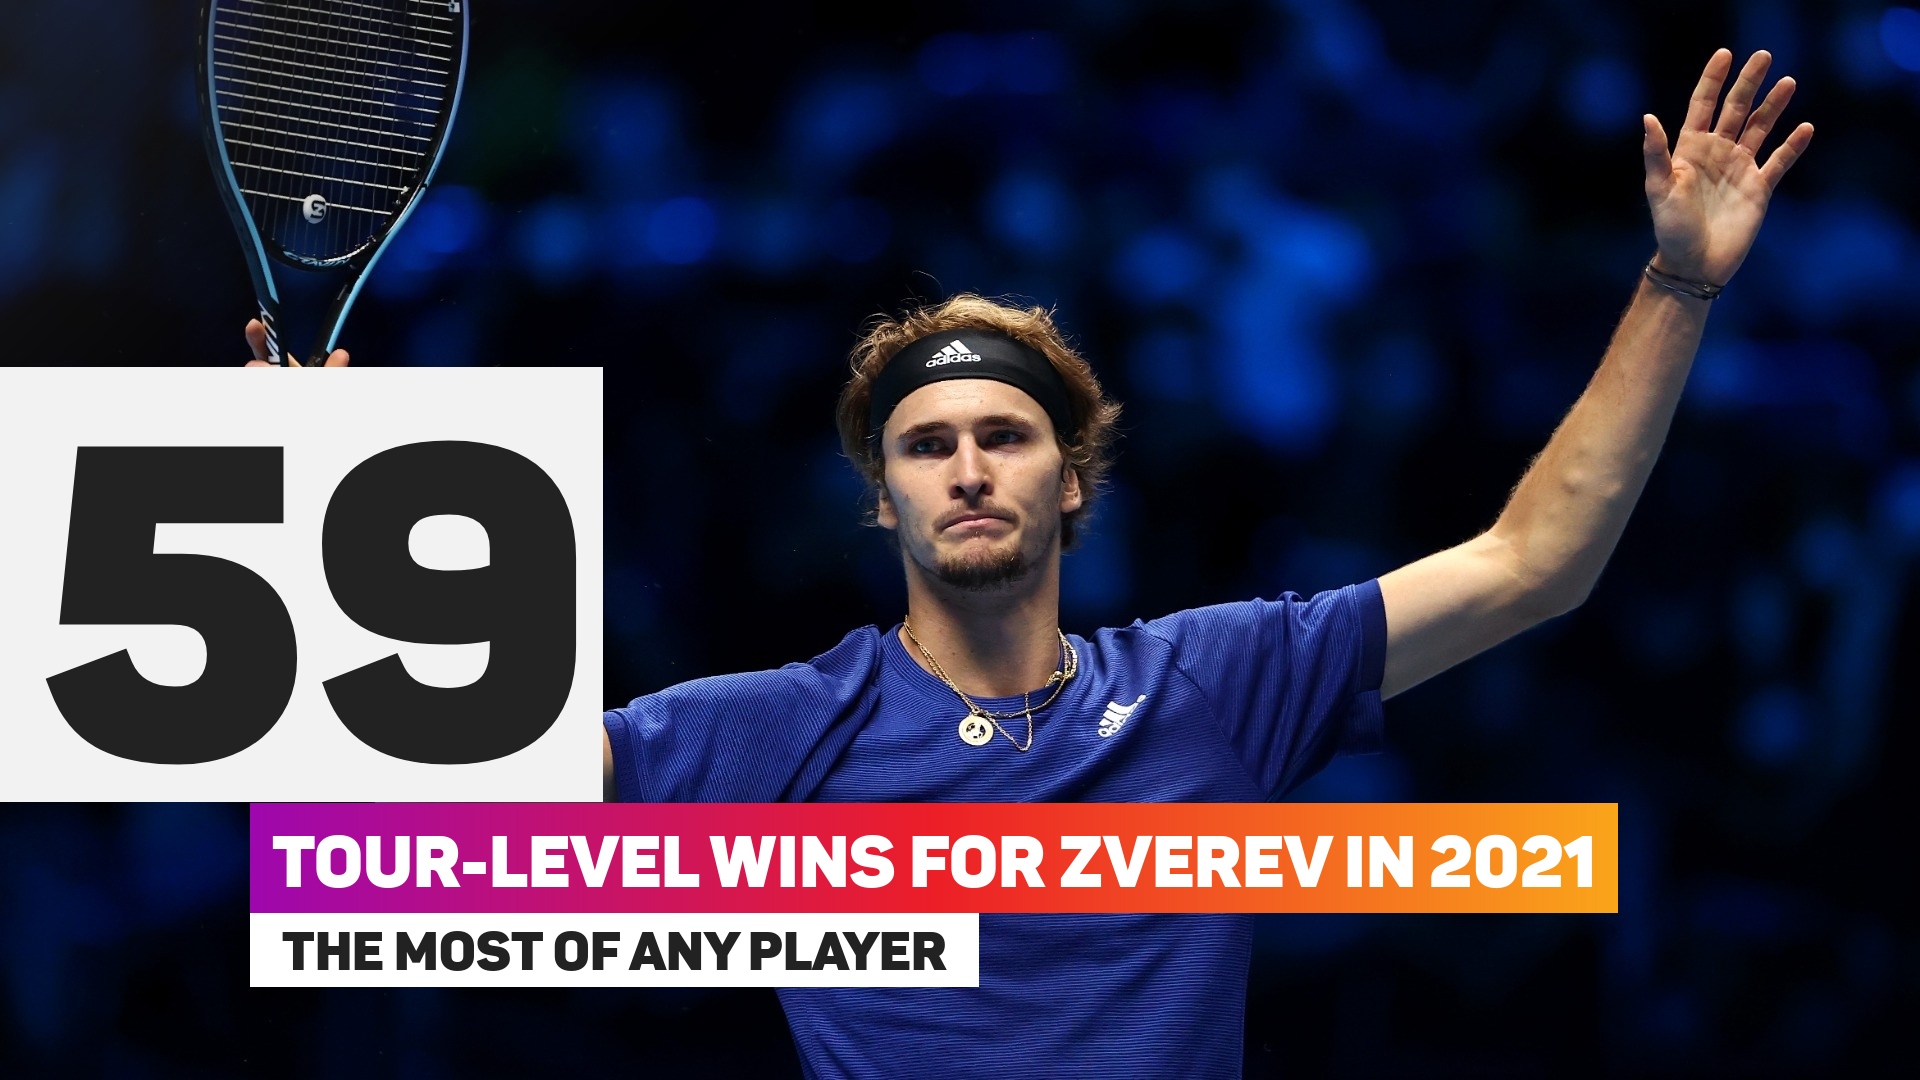 Zverev has won 59 tour-level matches in 2021